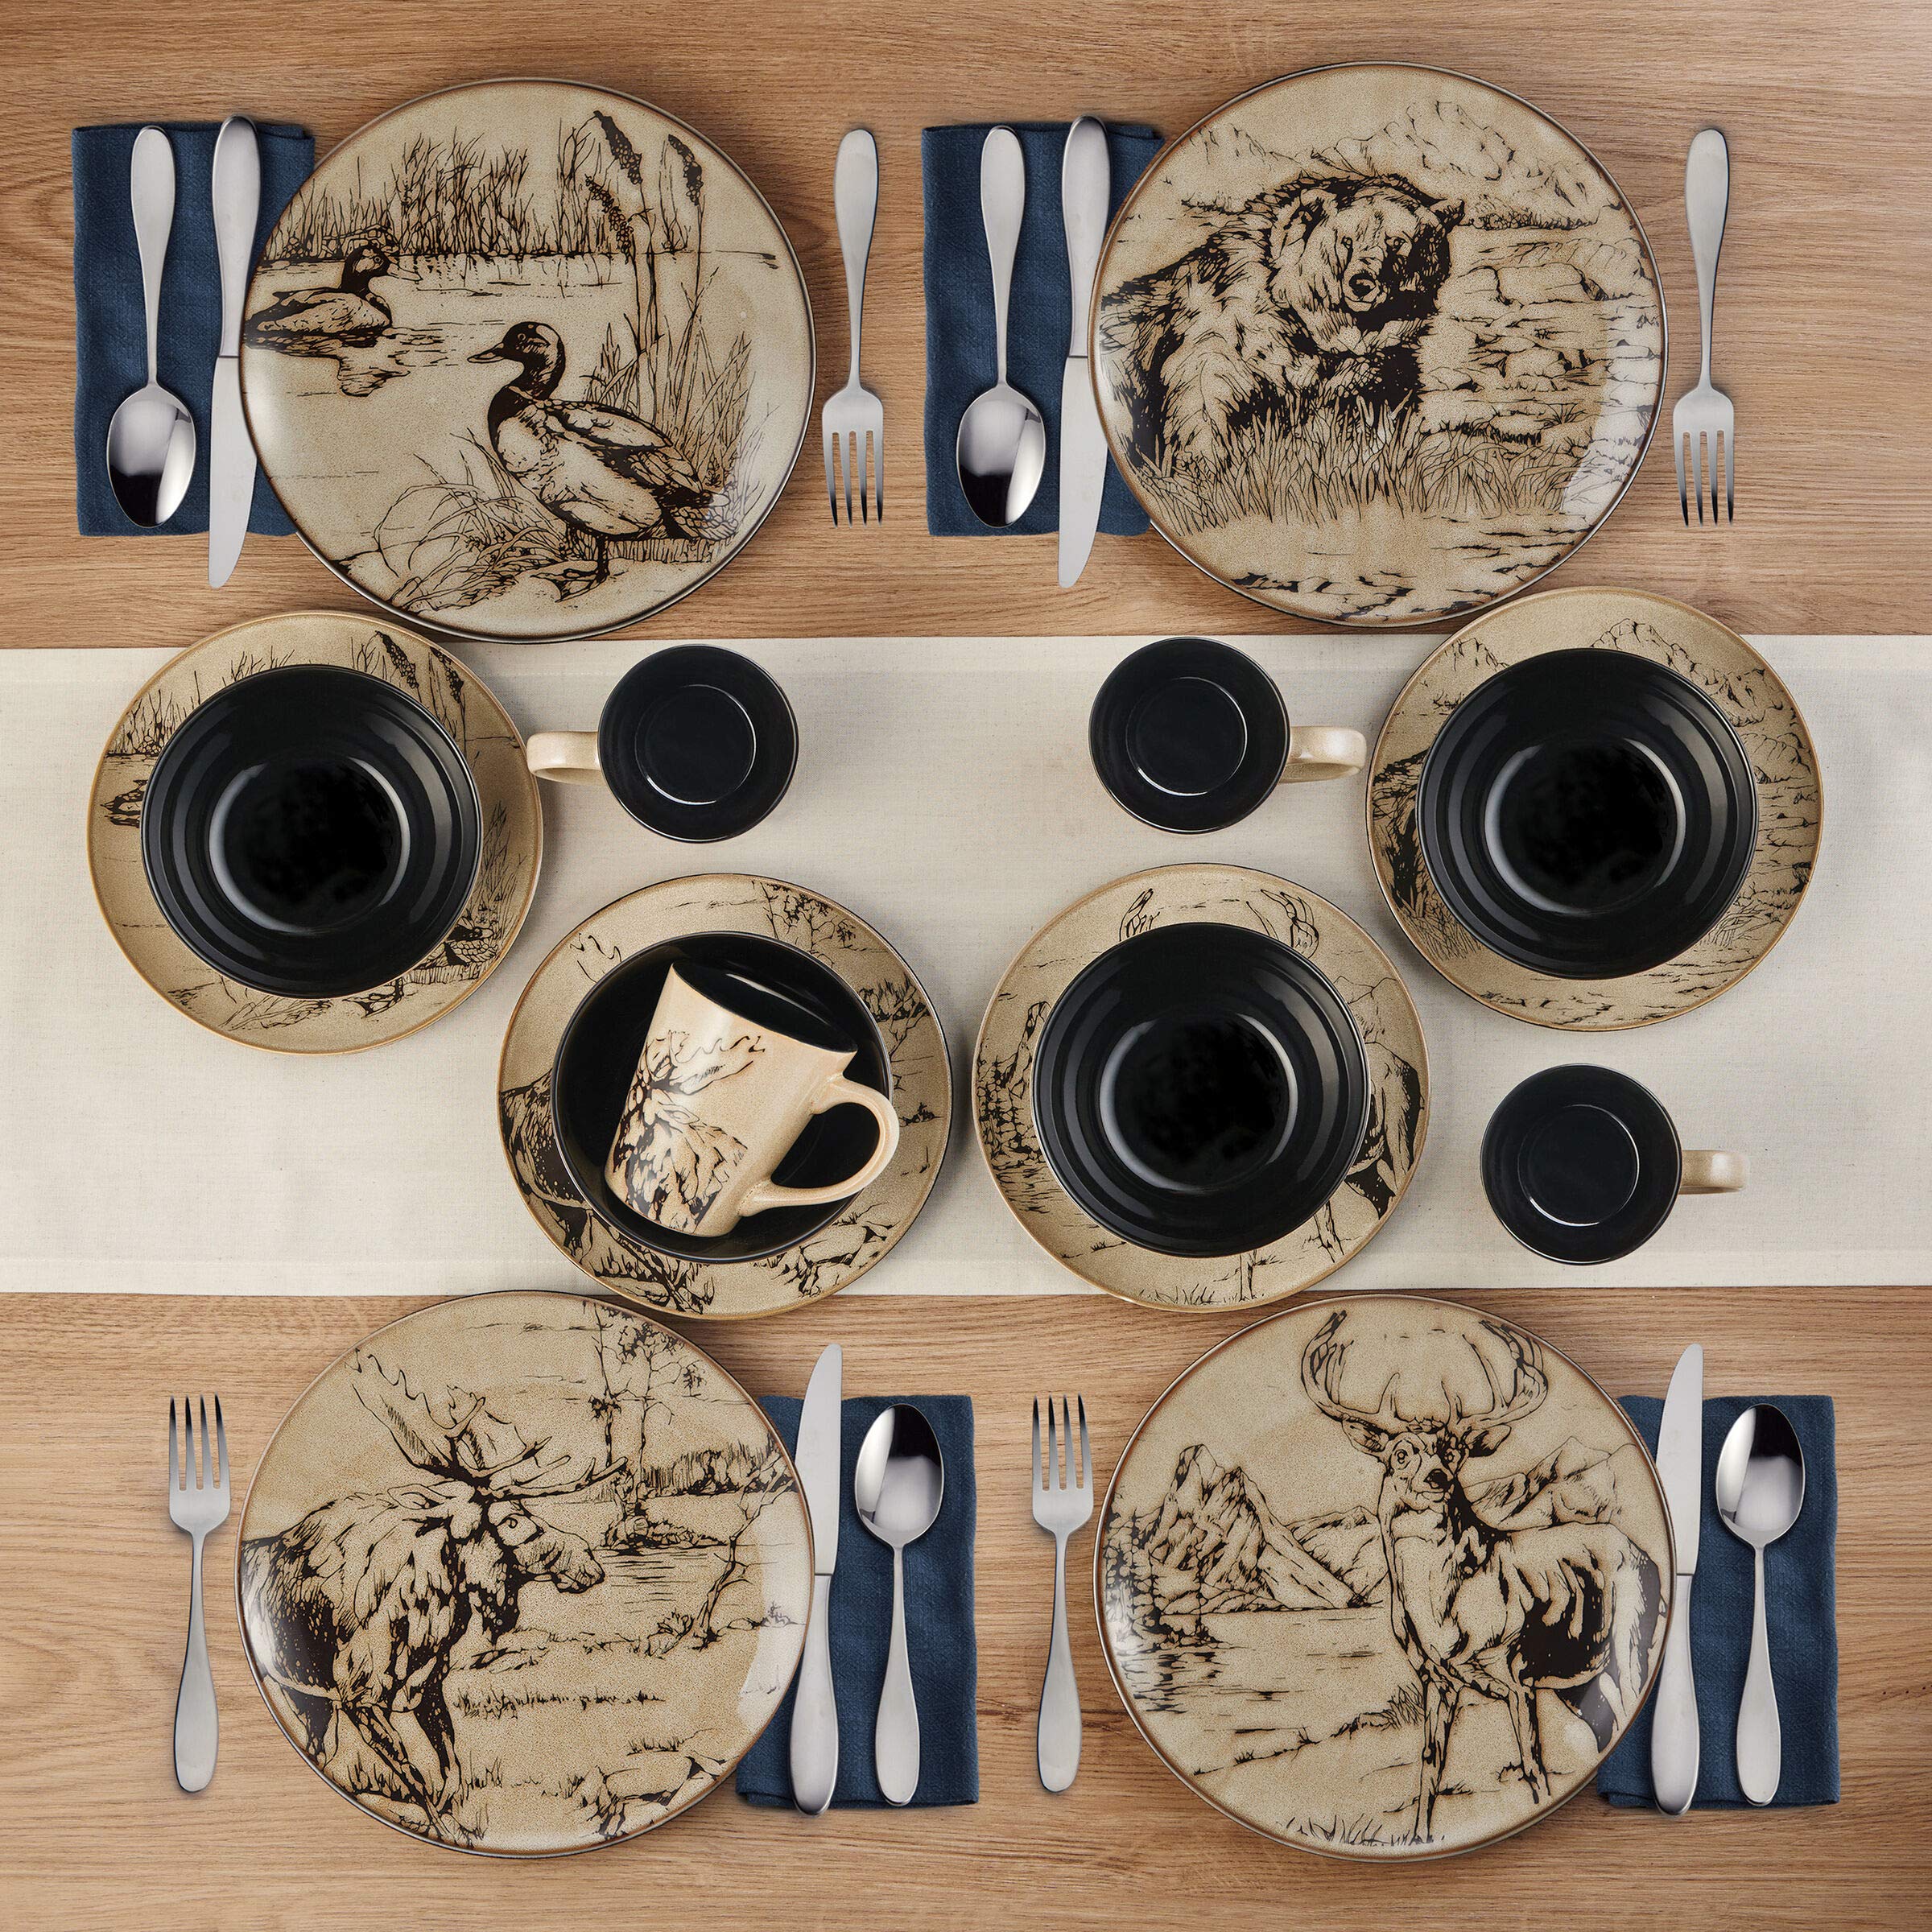 Mossy Oak Animal Print 16 Piece Dinnerware Set, Black and Beige